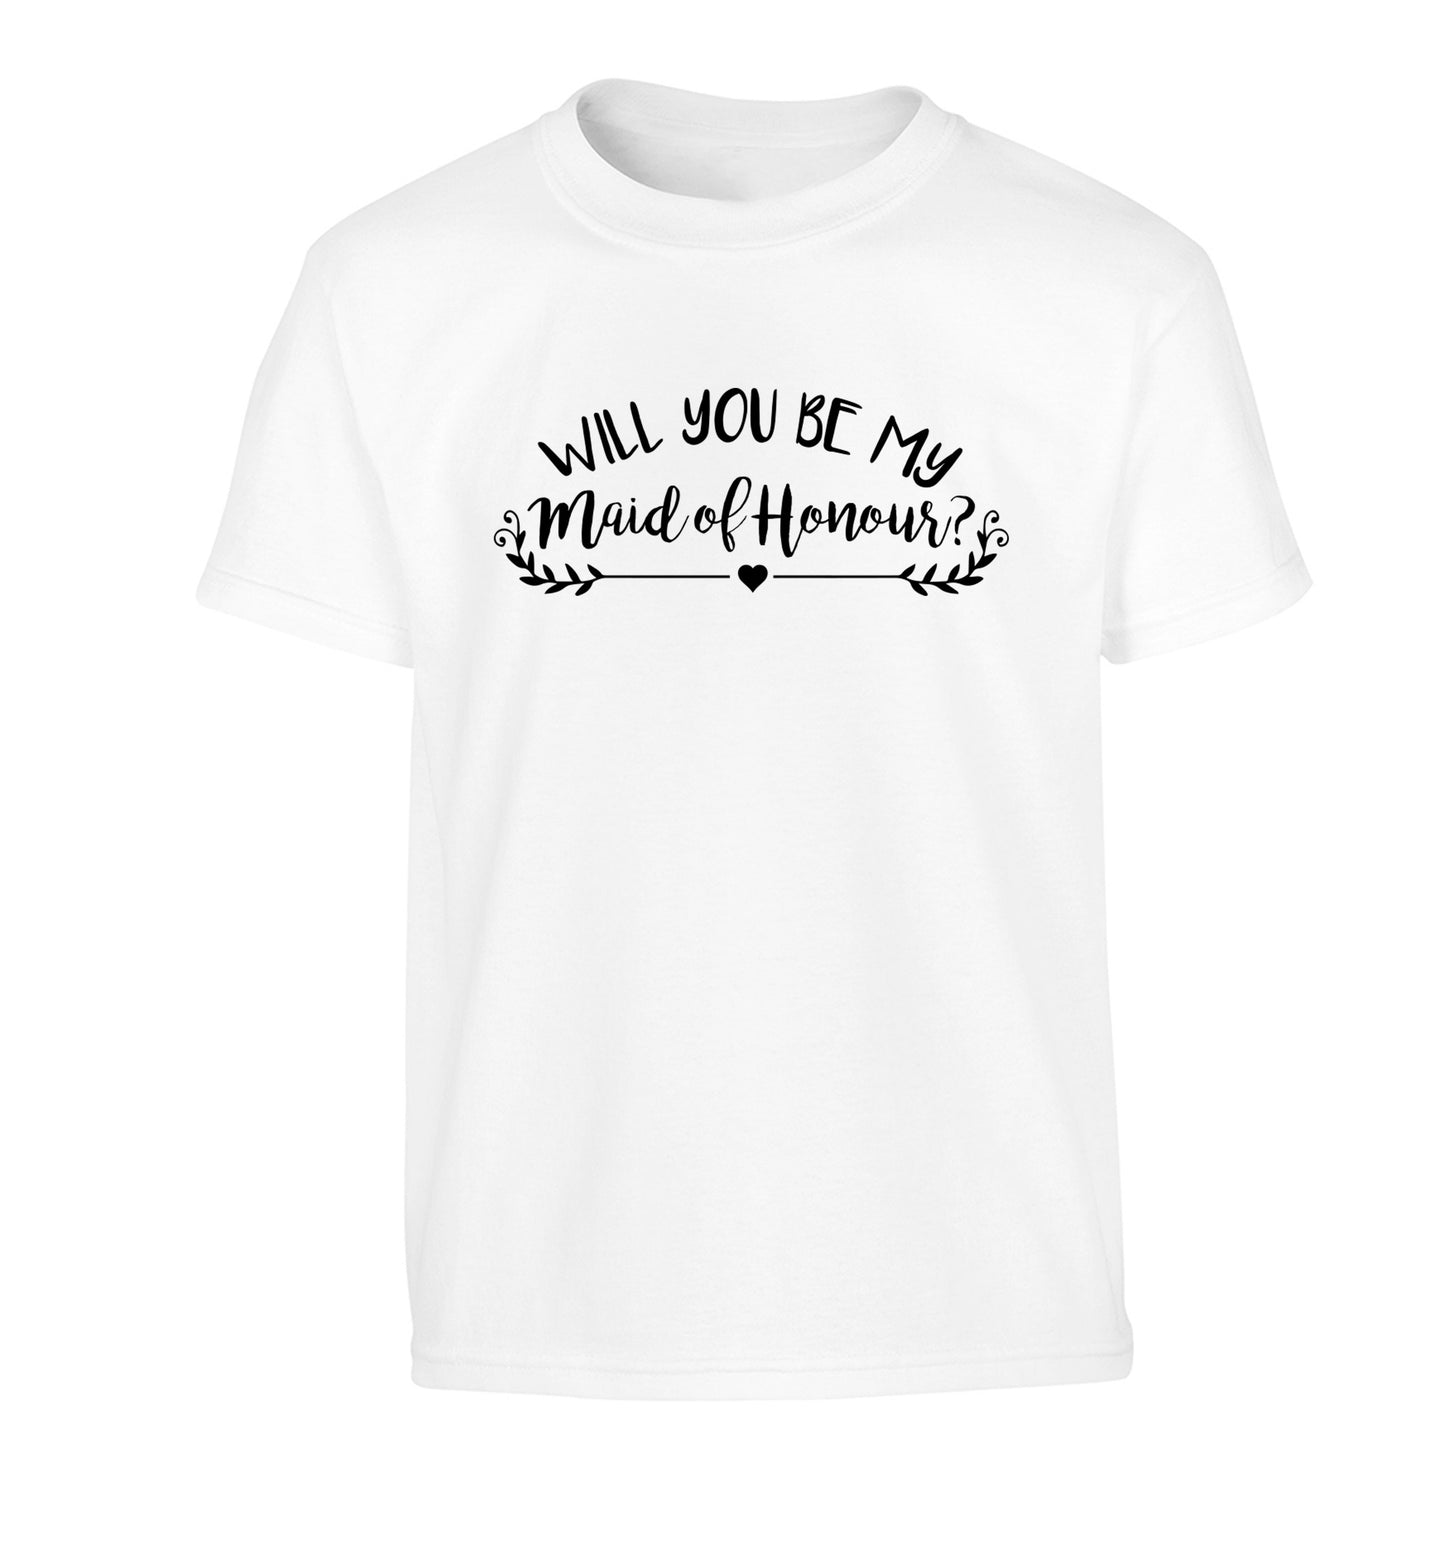 Will you be my maid of honour? Children's white Tshirt 12-14 Years